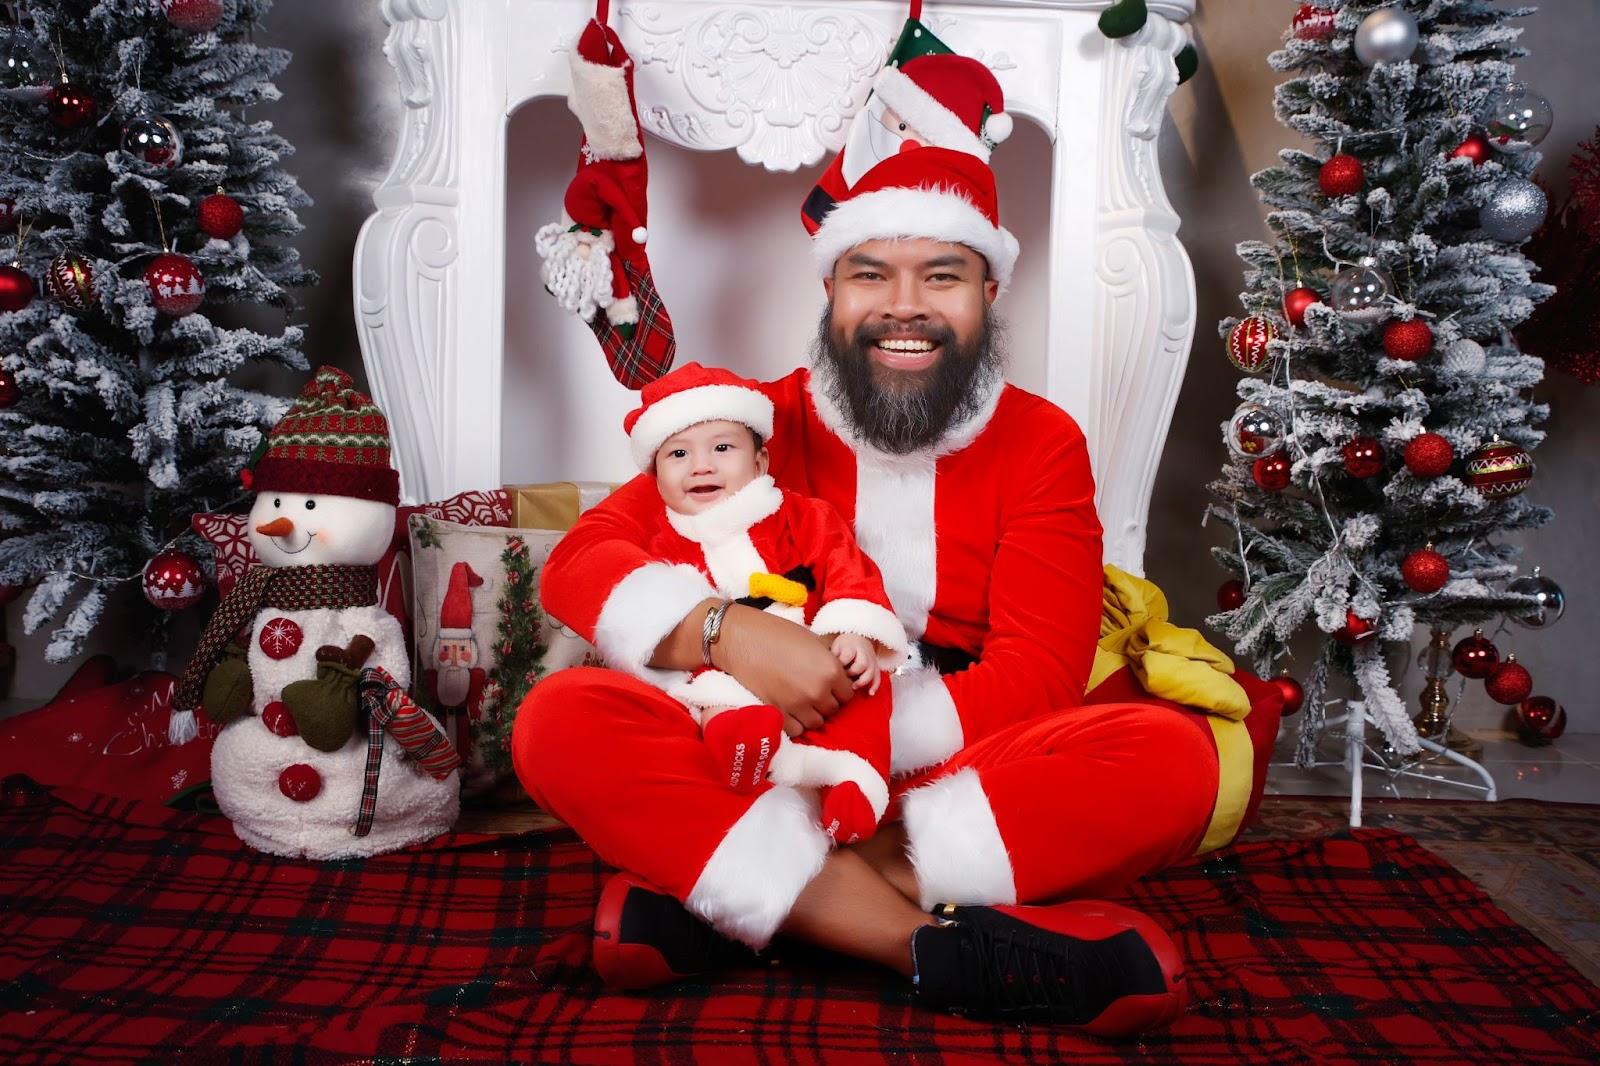 Family Christmas Photo Outfit Ideas: the santa getup